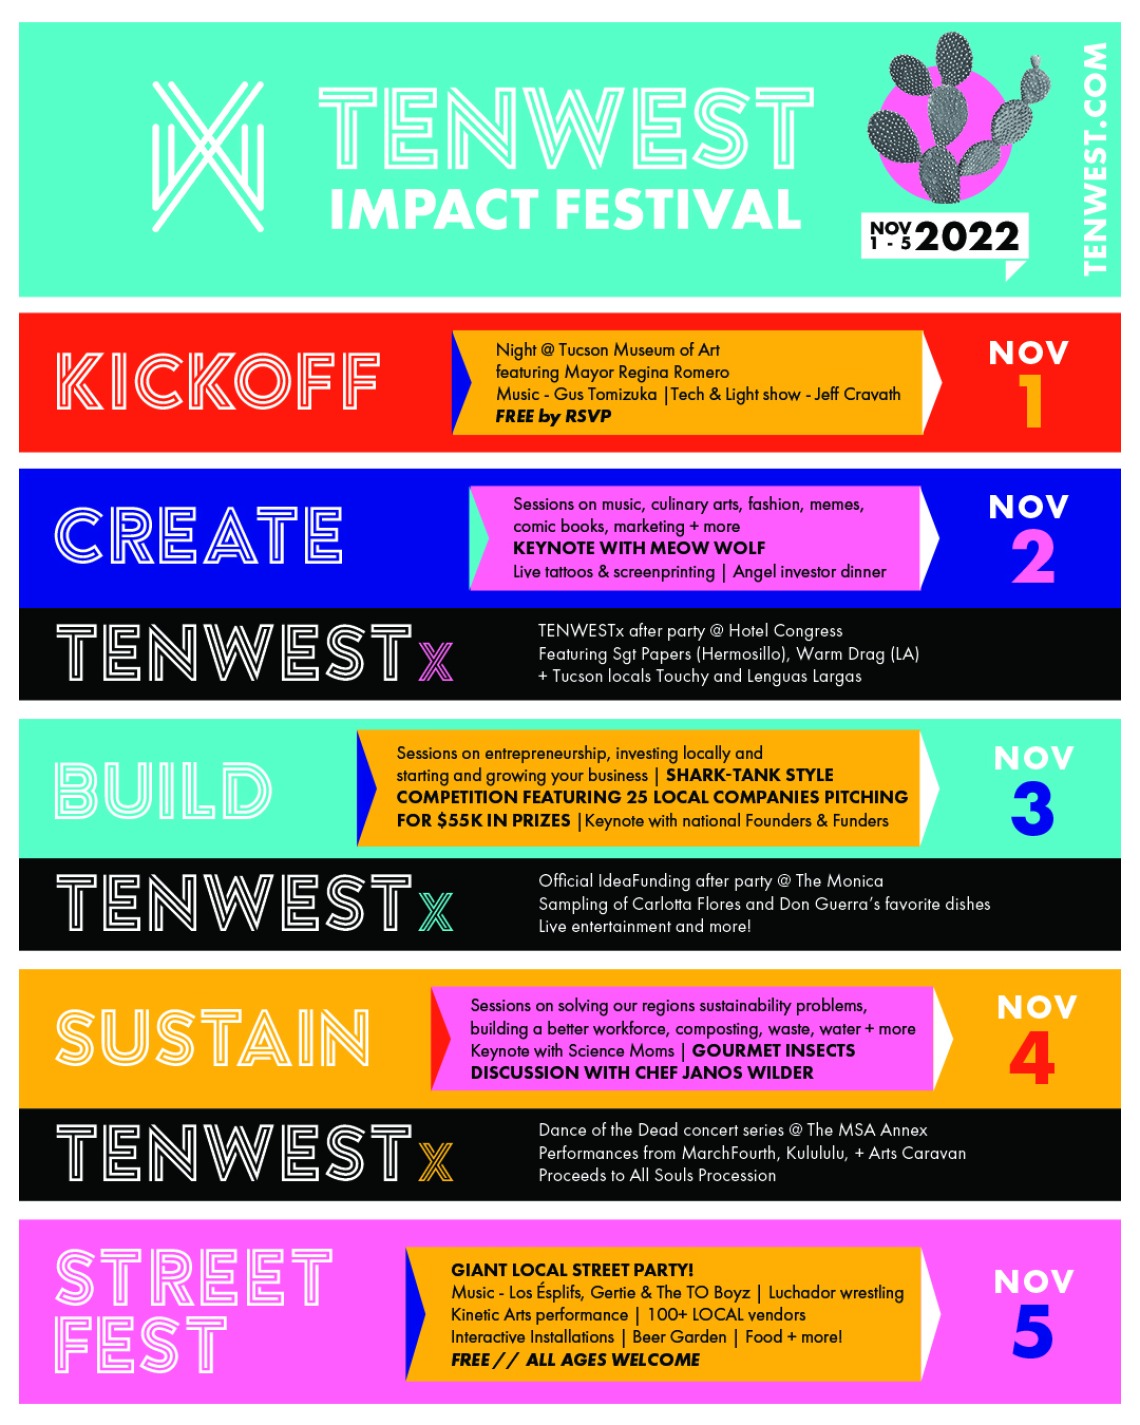 Tenwest Impact Festival, November 1-5